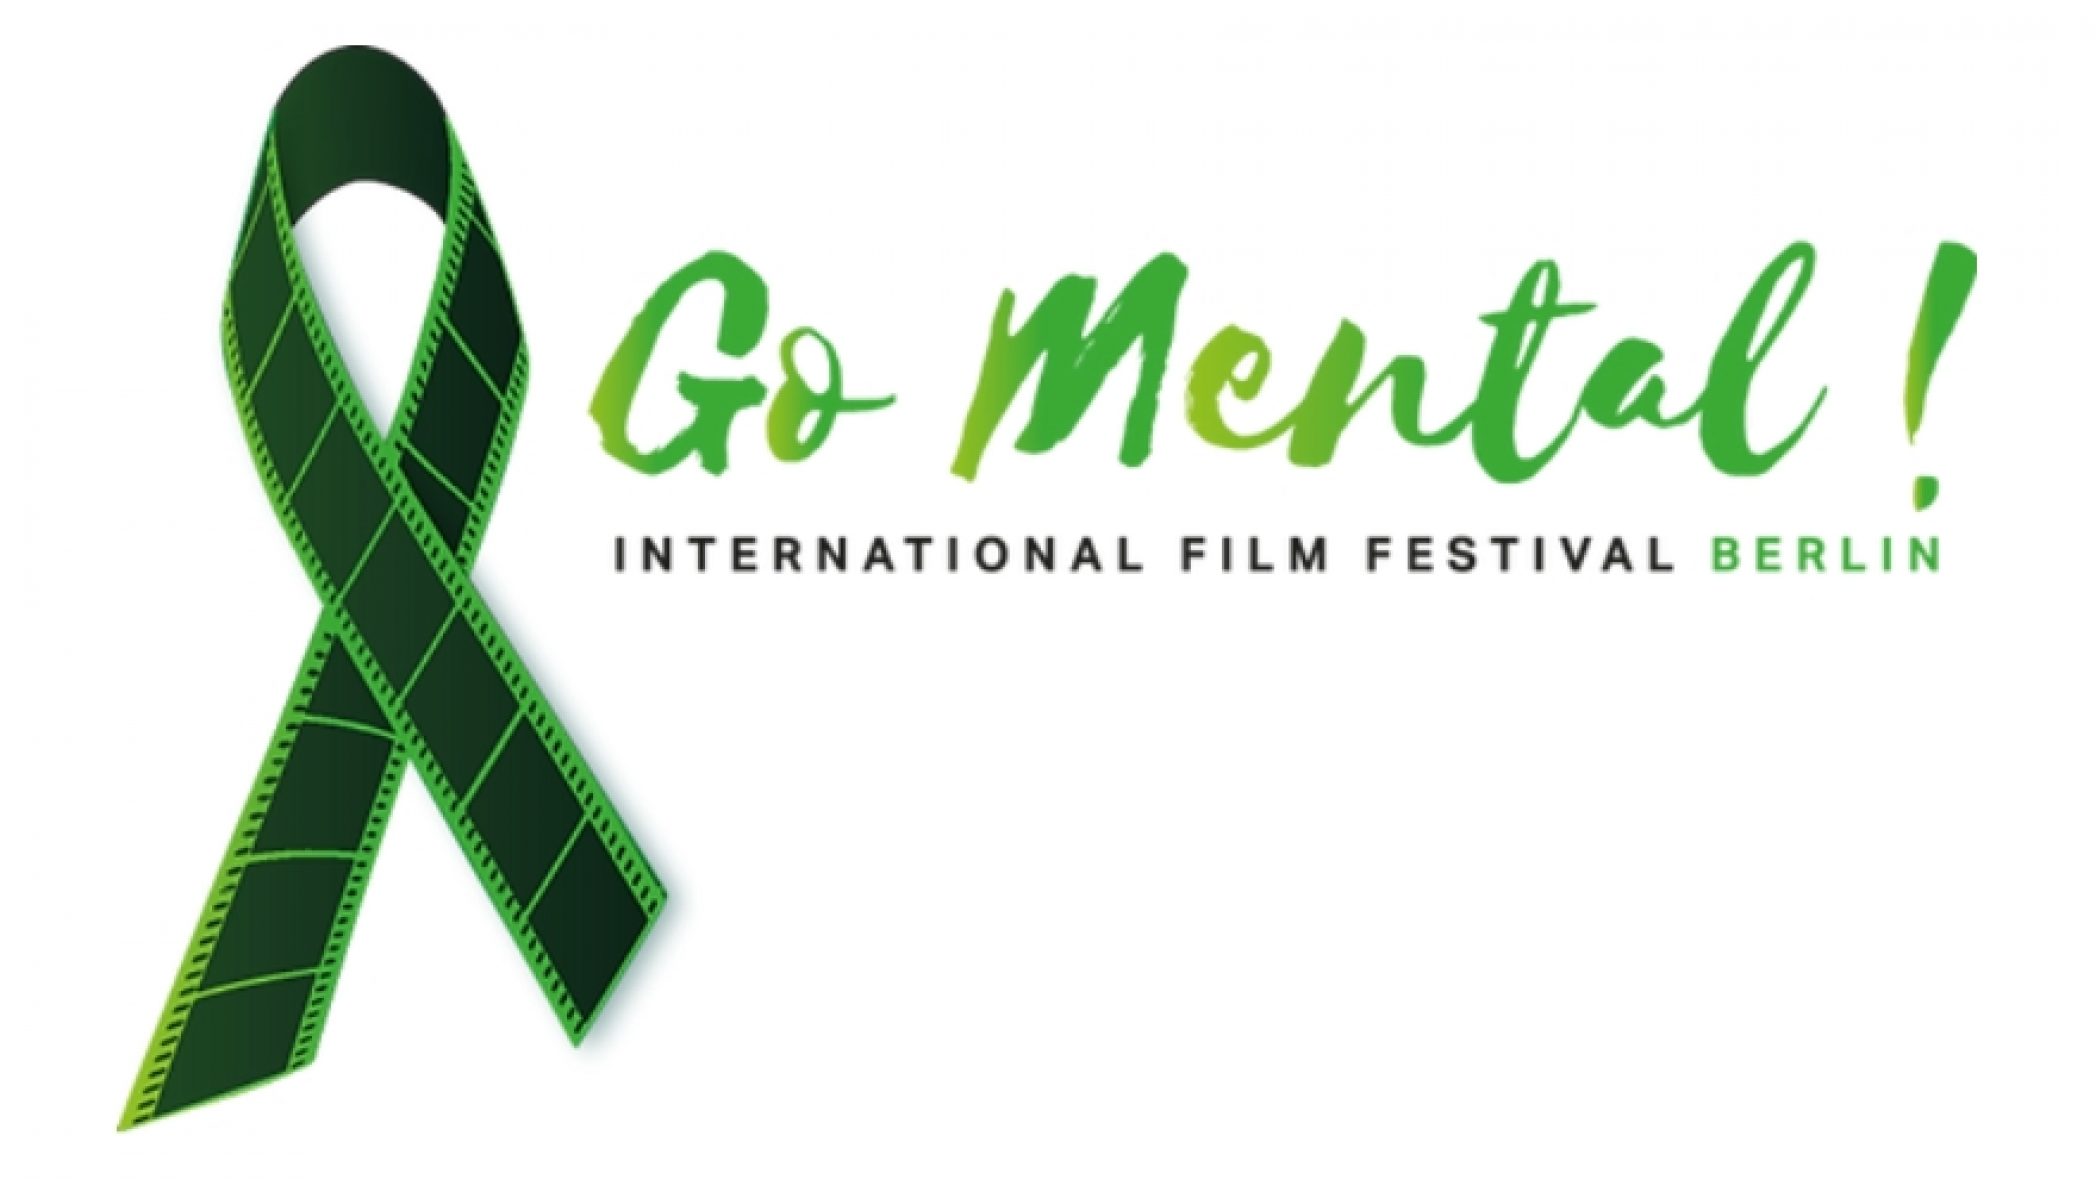 Go Mental! International Film Festival Berlin. Einreischluss 14. Februar 2022